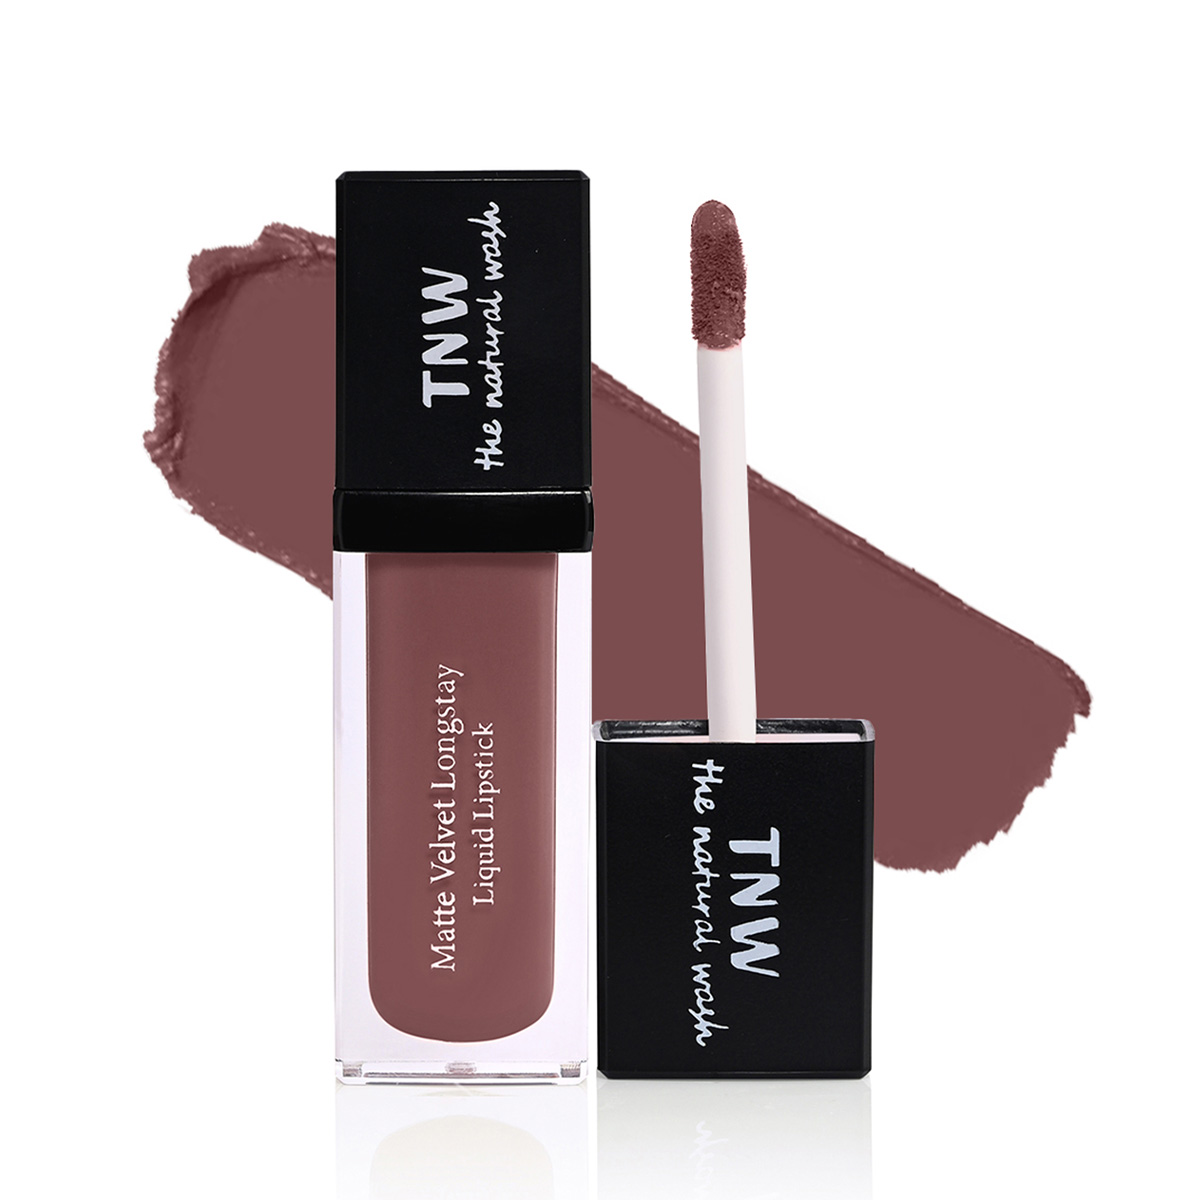 TNW - The Natural Wash Matte Velvet Longstay Liquid Lipstick, 05 - Plumberry - Cocoa Plum, 5ml